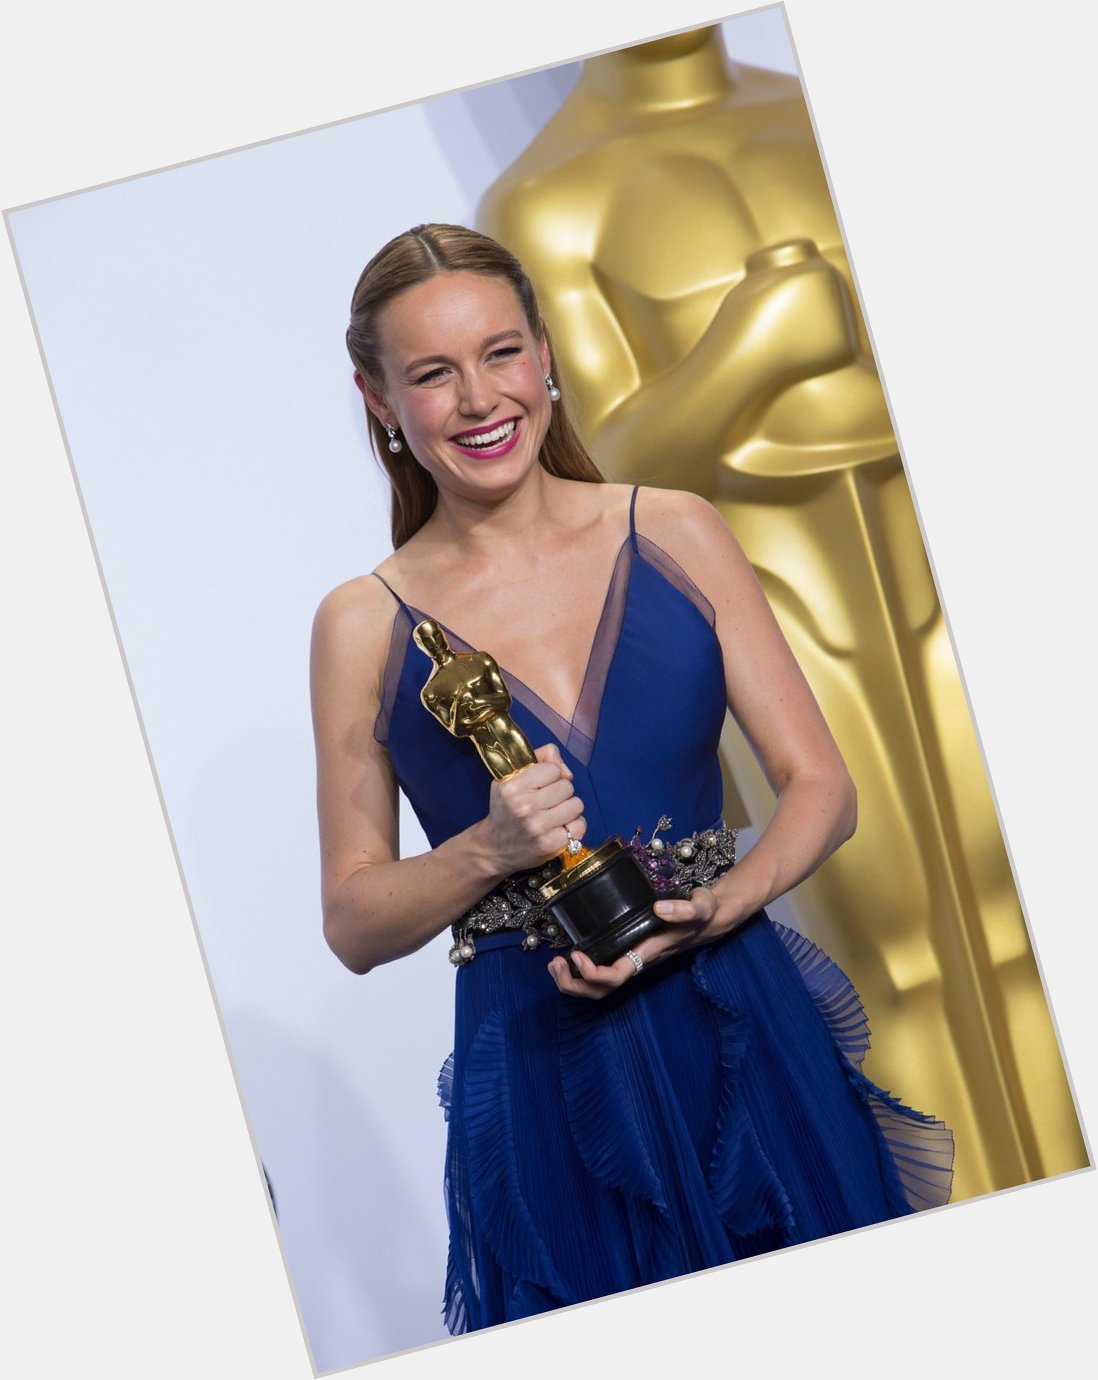 Happy birthday to the marvelous, badass Oscar winner Brie Larson!  